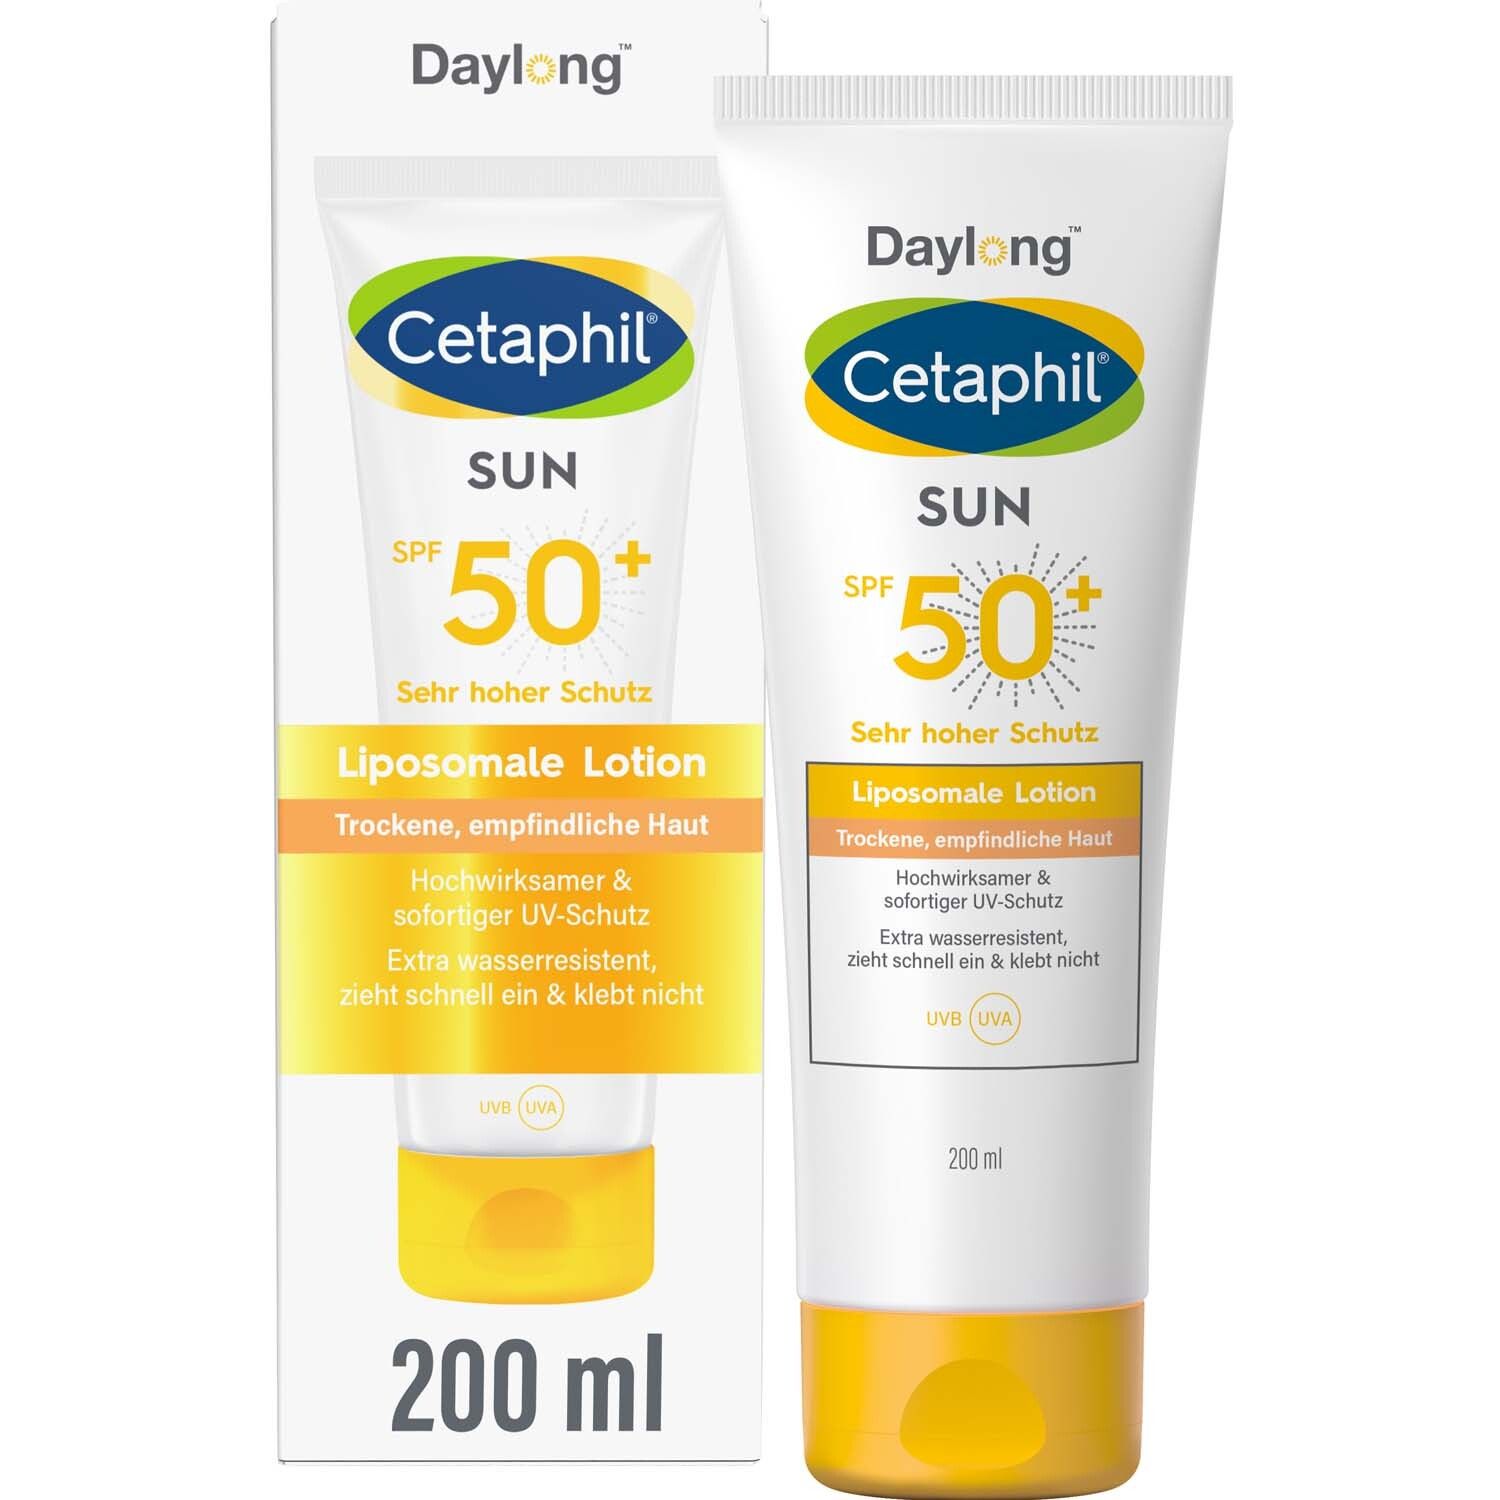 Cetaphil® Sun Daylong® SPF 50+ Liposomale Lotion